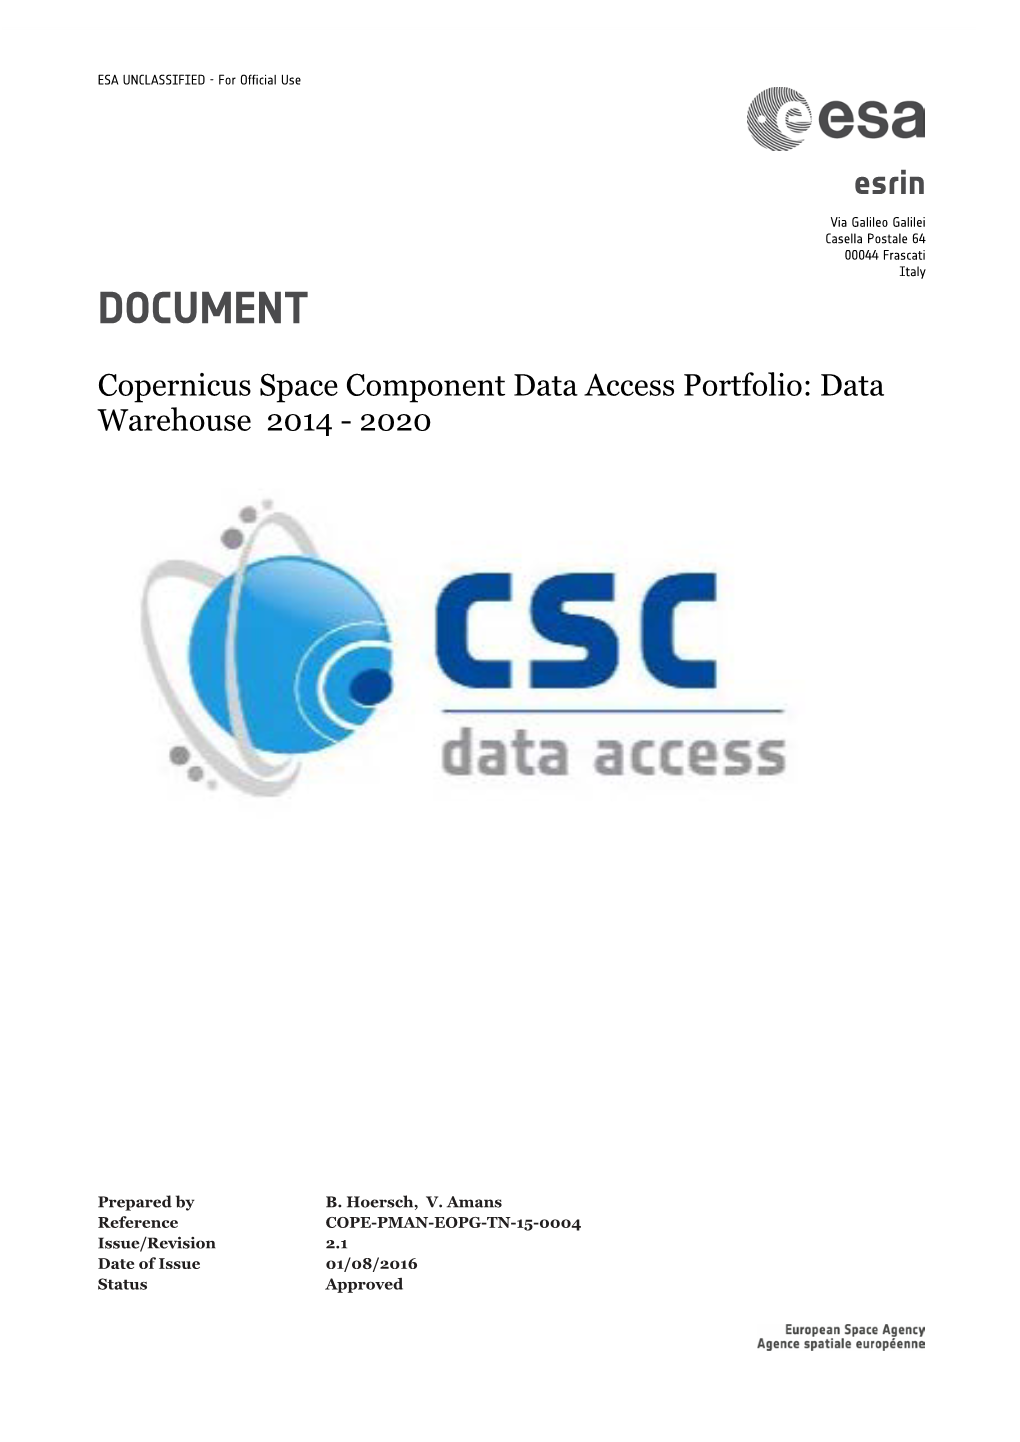 Copernicus Space Component Data Access Portfolio: Data Warehouse 2014 - 2020